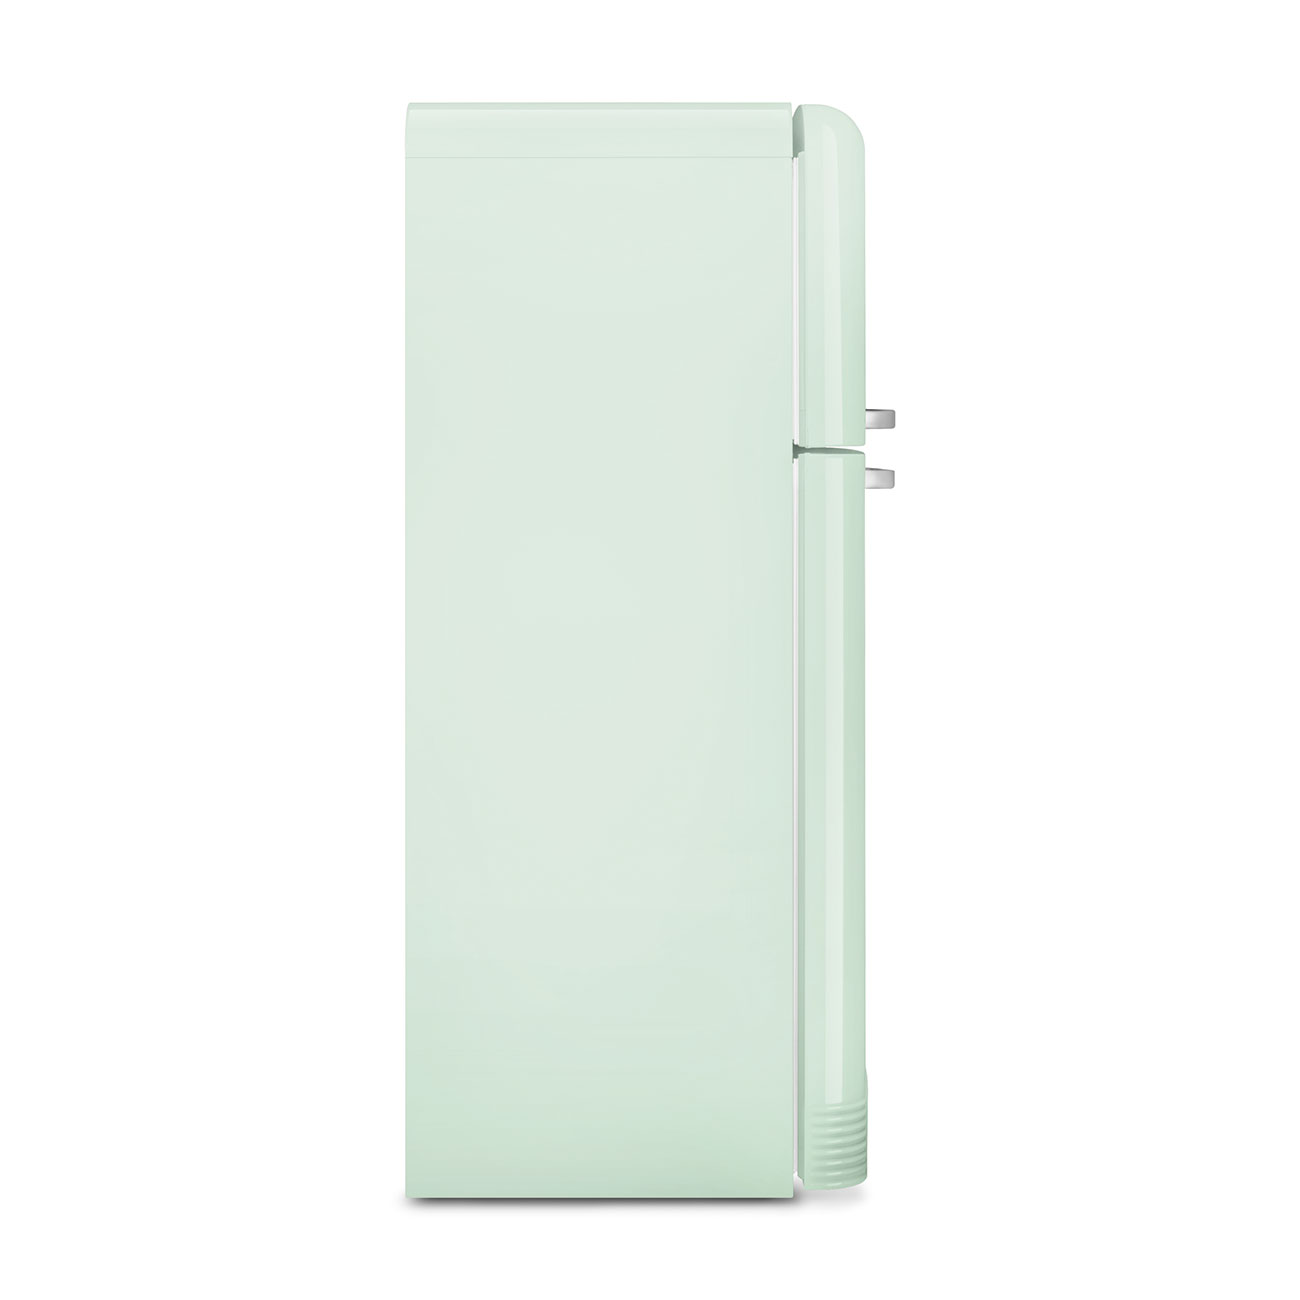 Pastel green refrigerator - Smeg_6